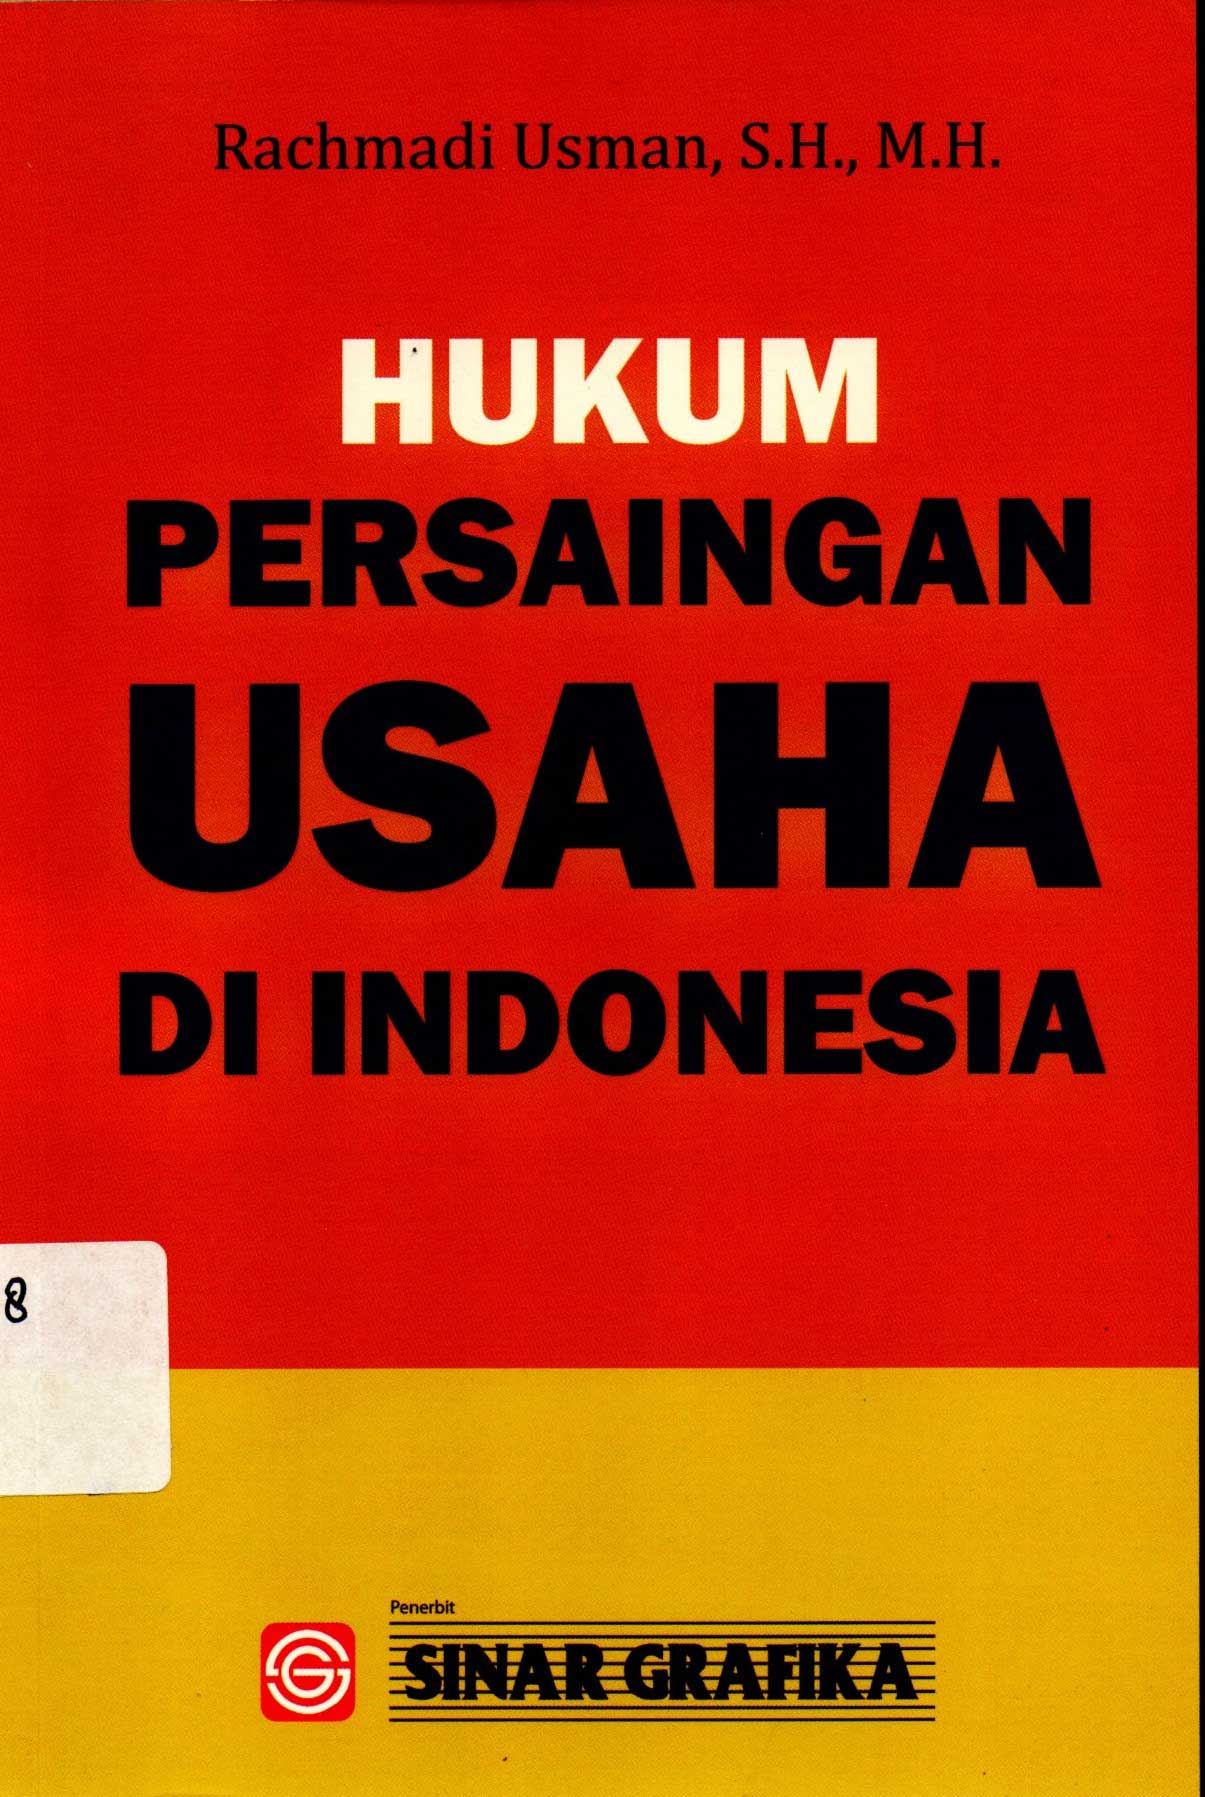 Hukum Persaingan Usaha di Indonesia